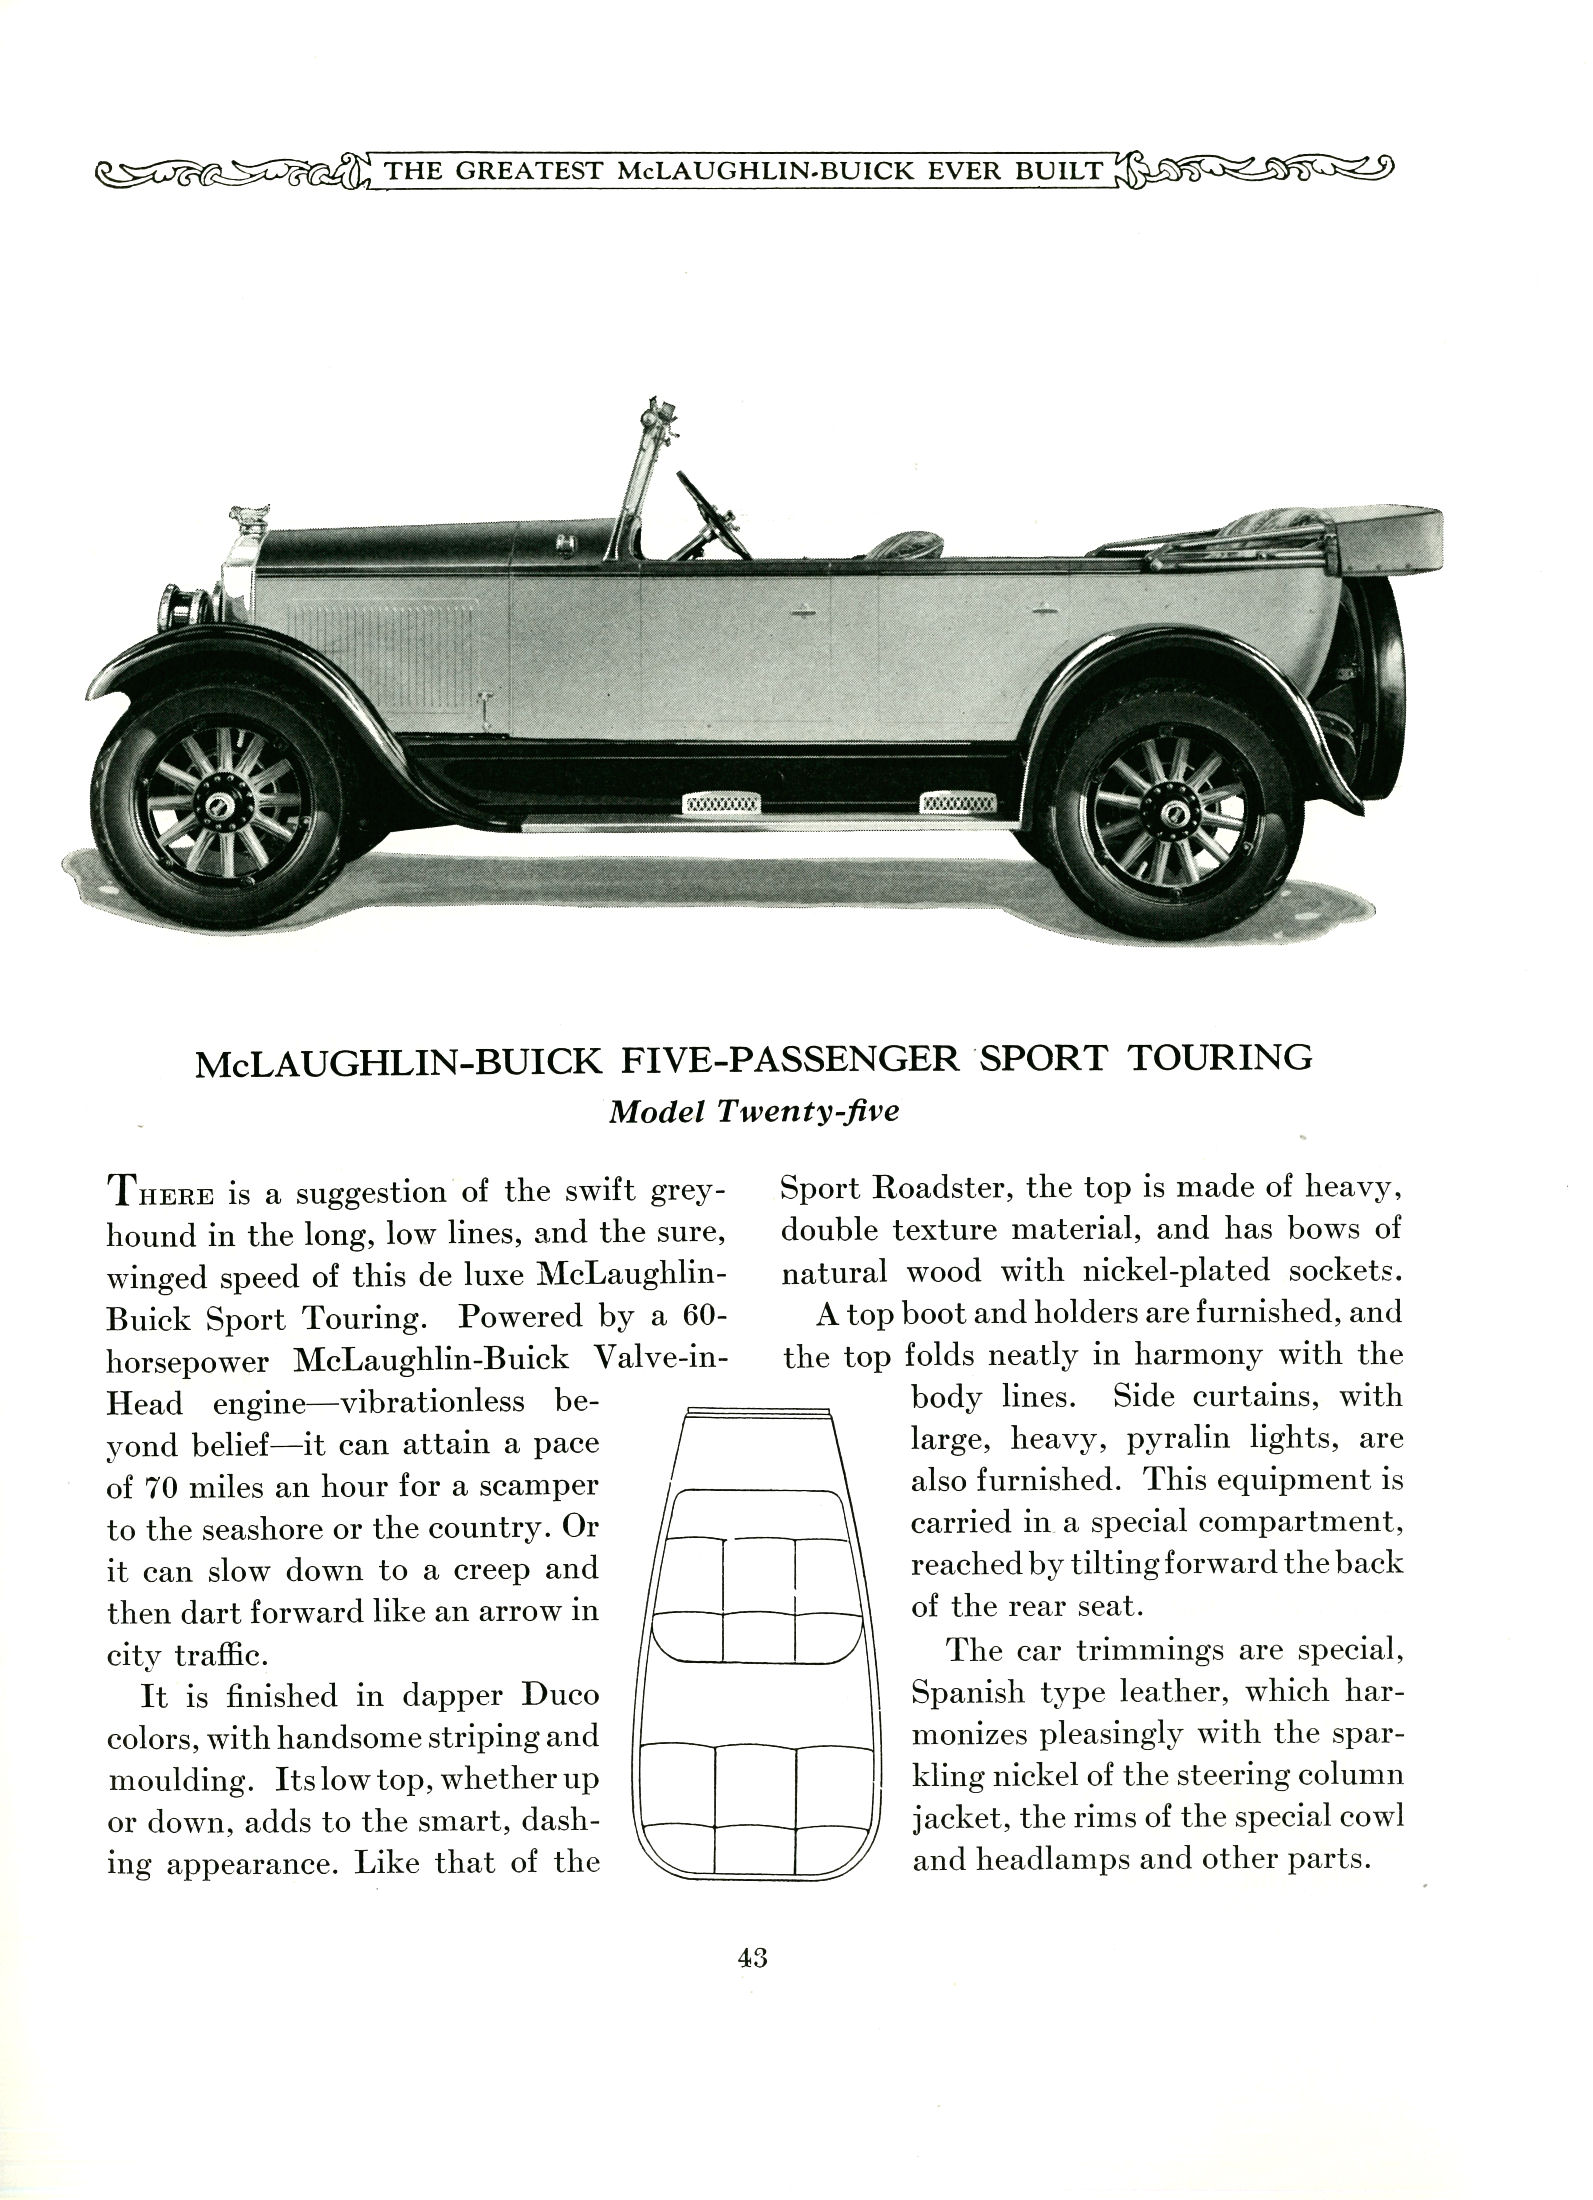 1930 McLaughlin Buick Booklet-43